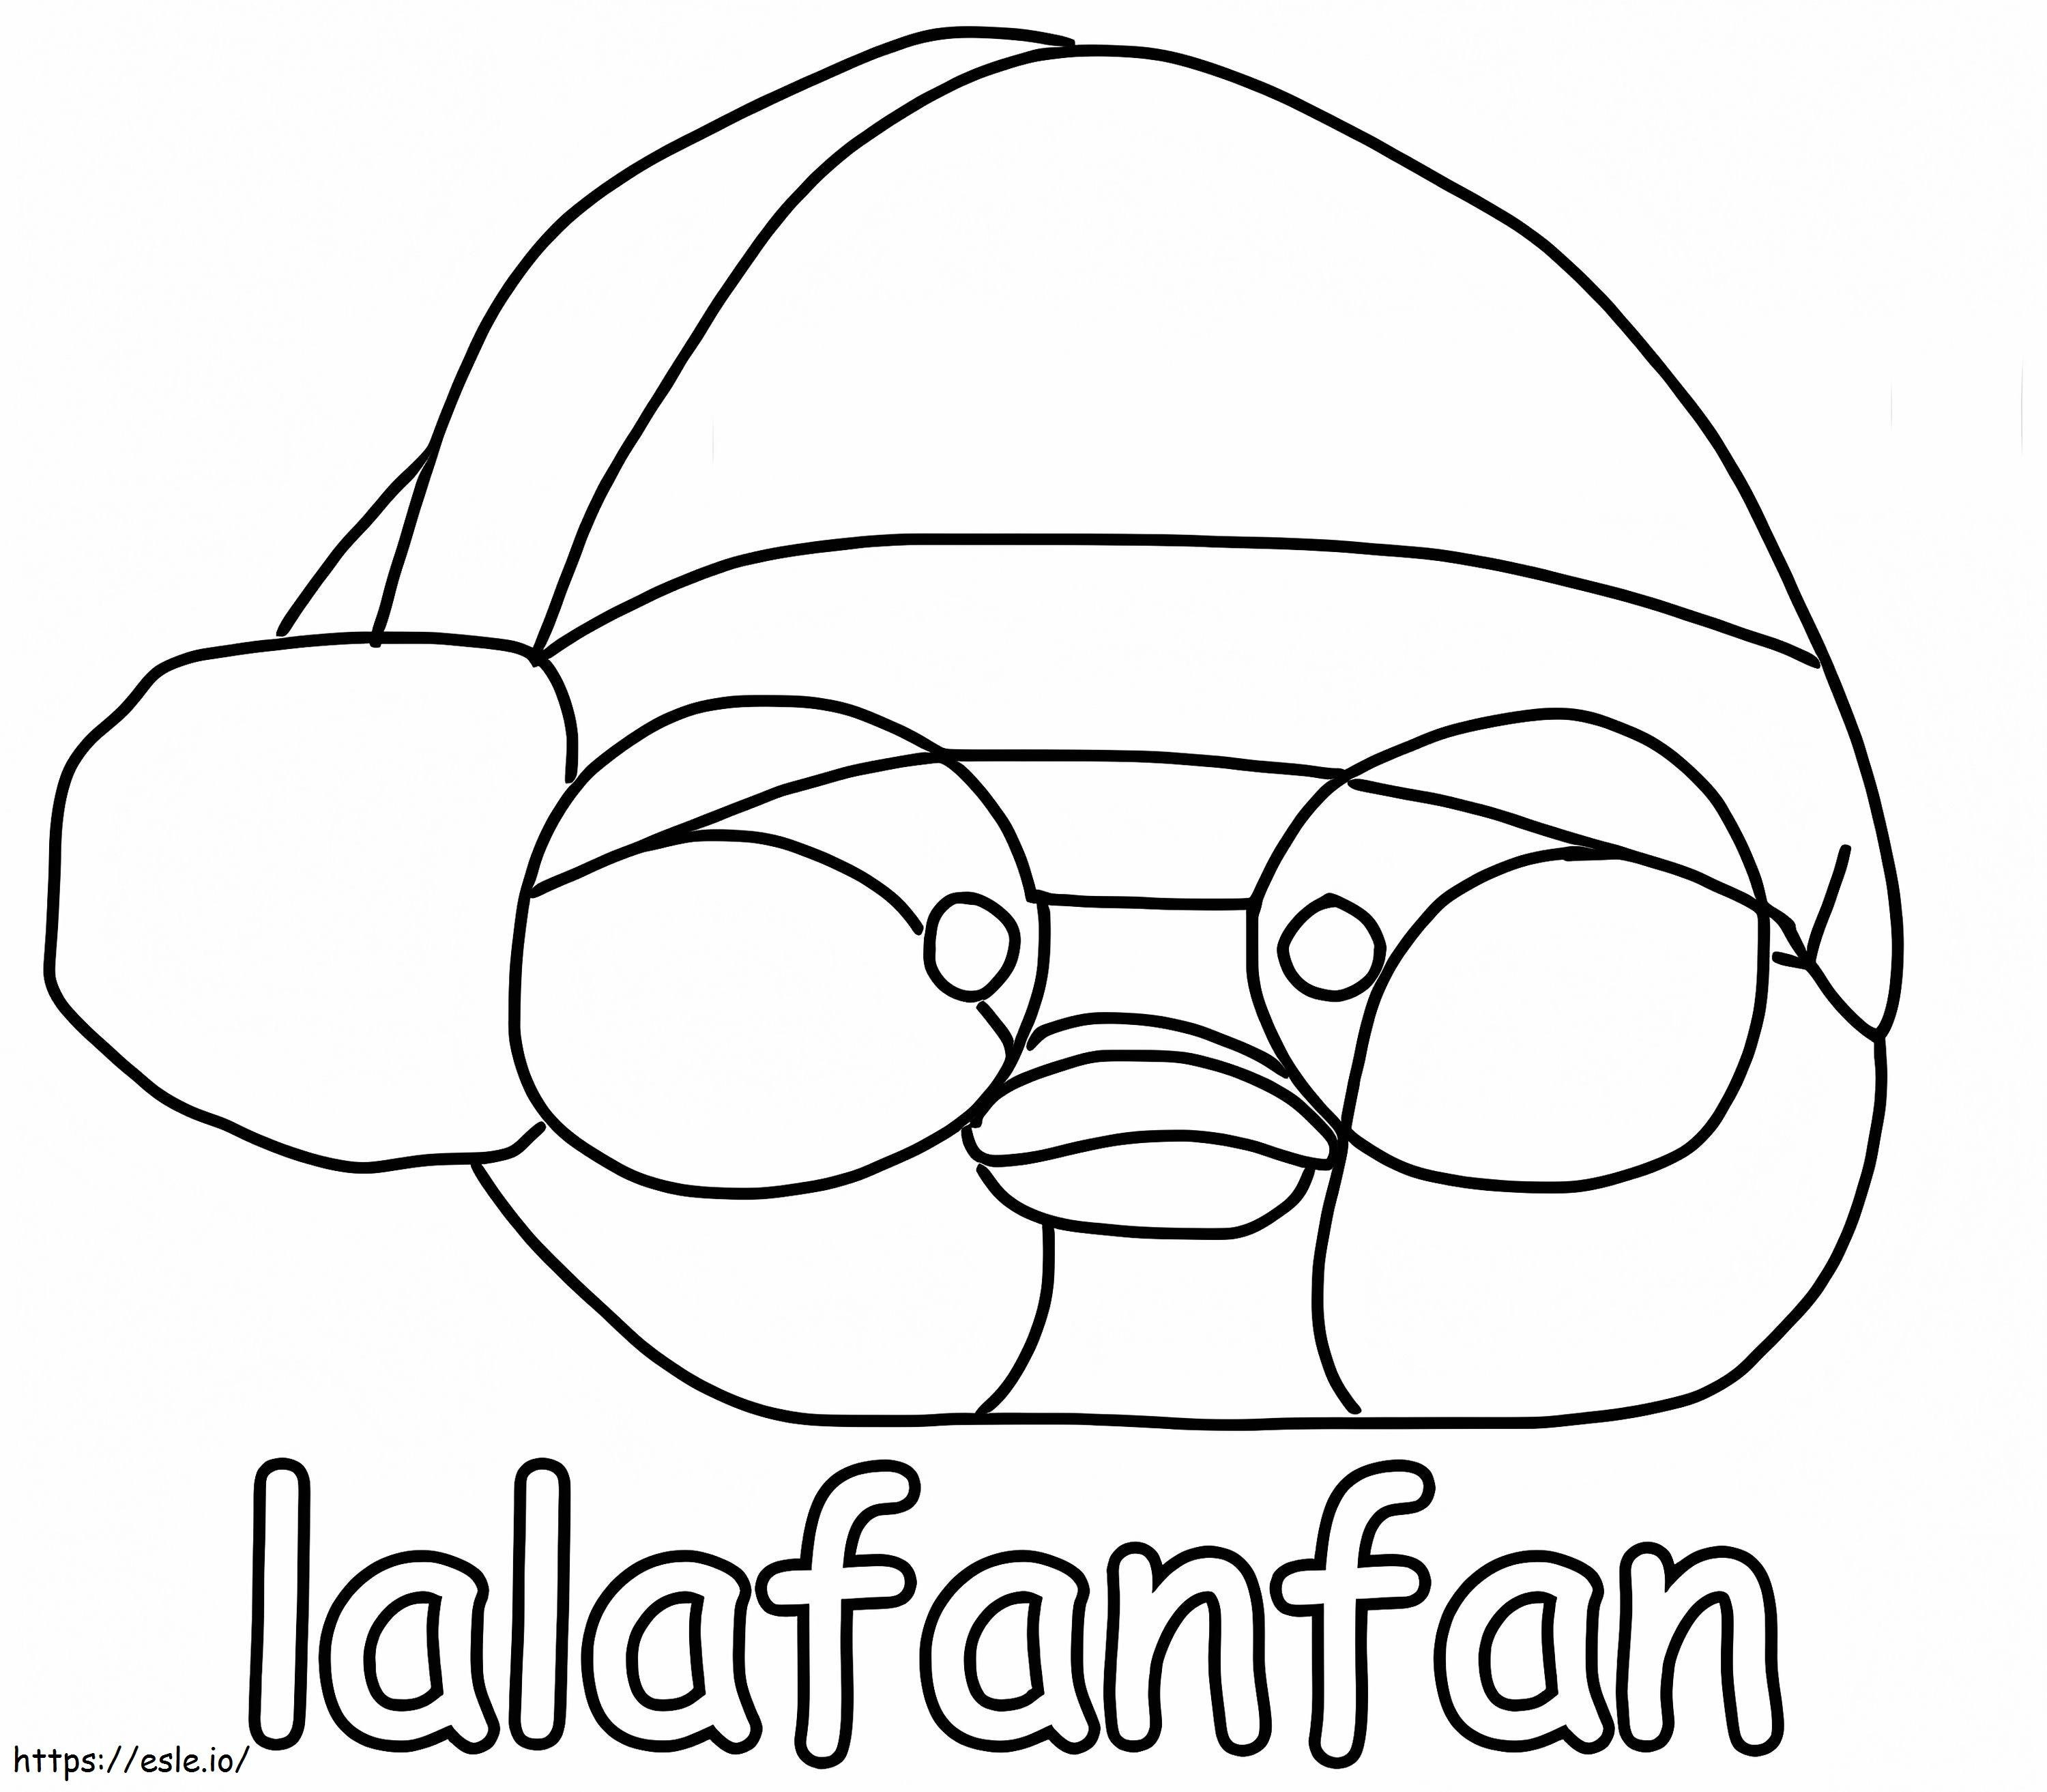 Lalafanfan Gratis para colorear